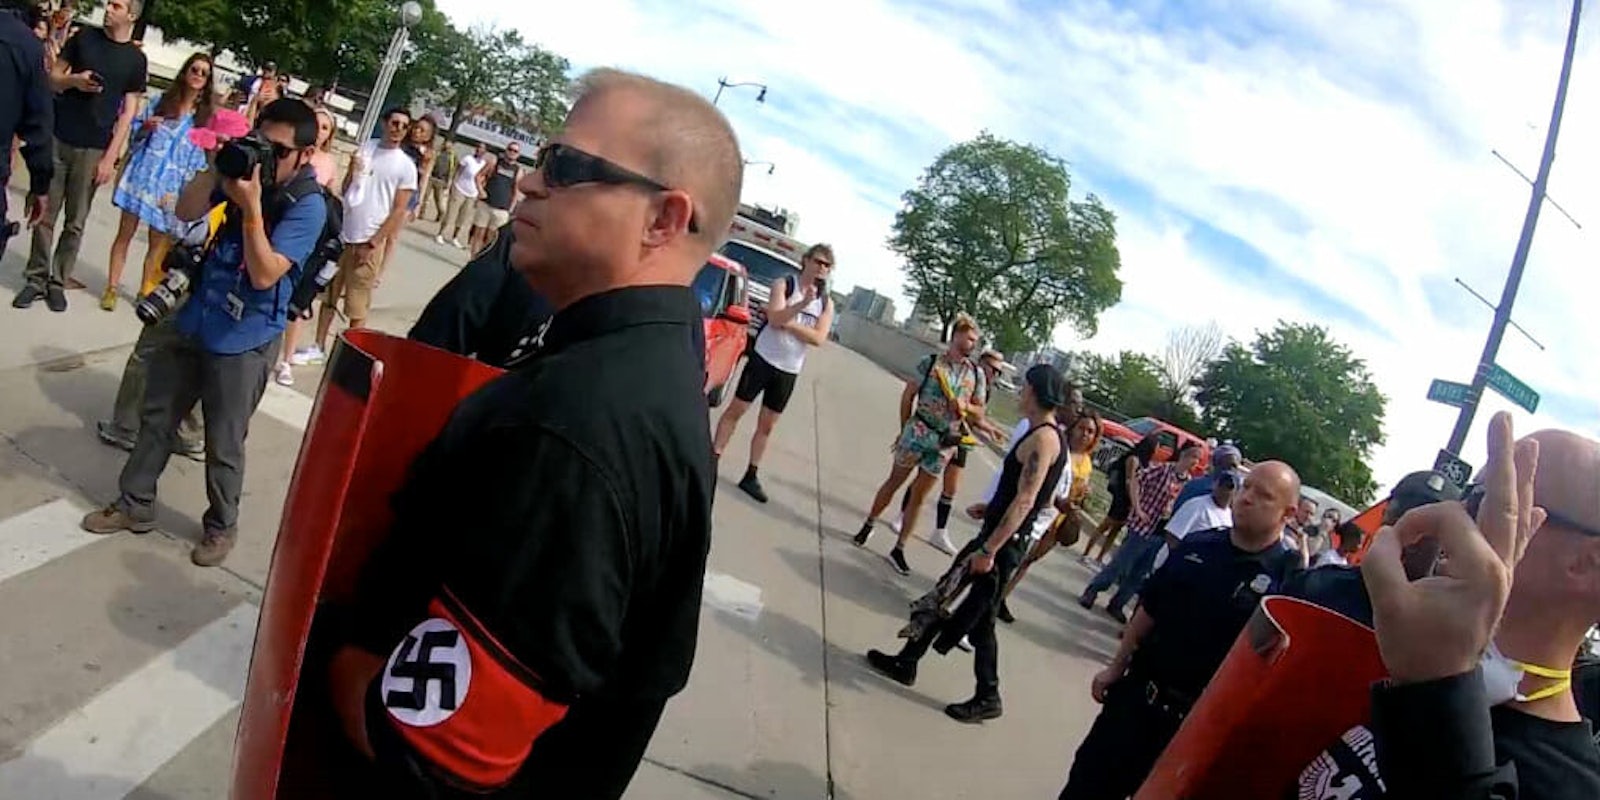 Neo-Nazis flashing white supremacy signs at Detroit Pride